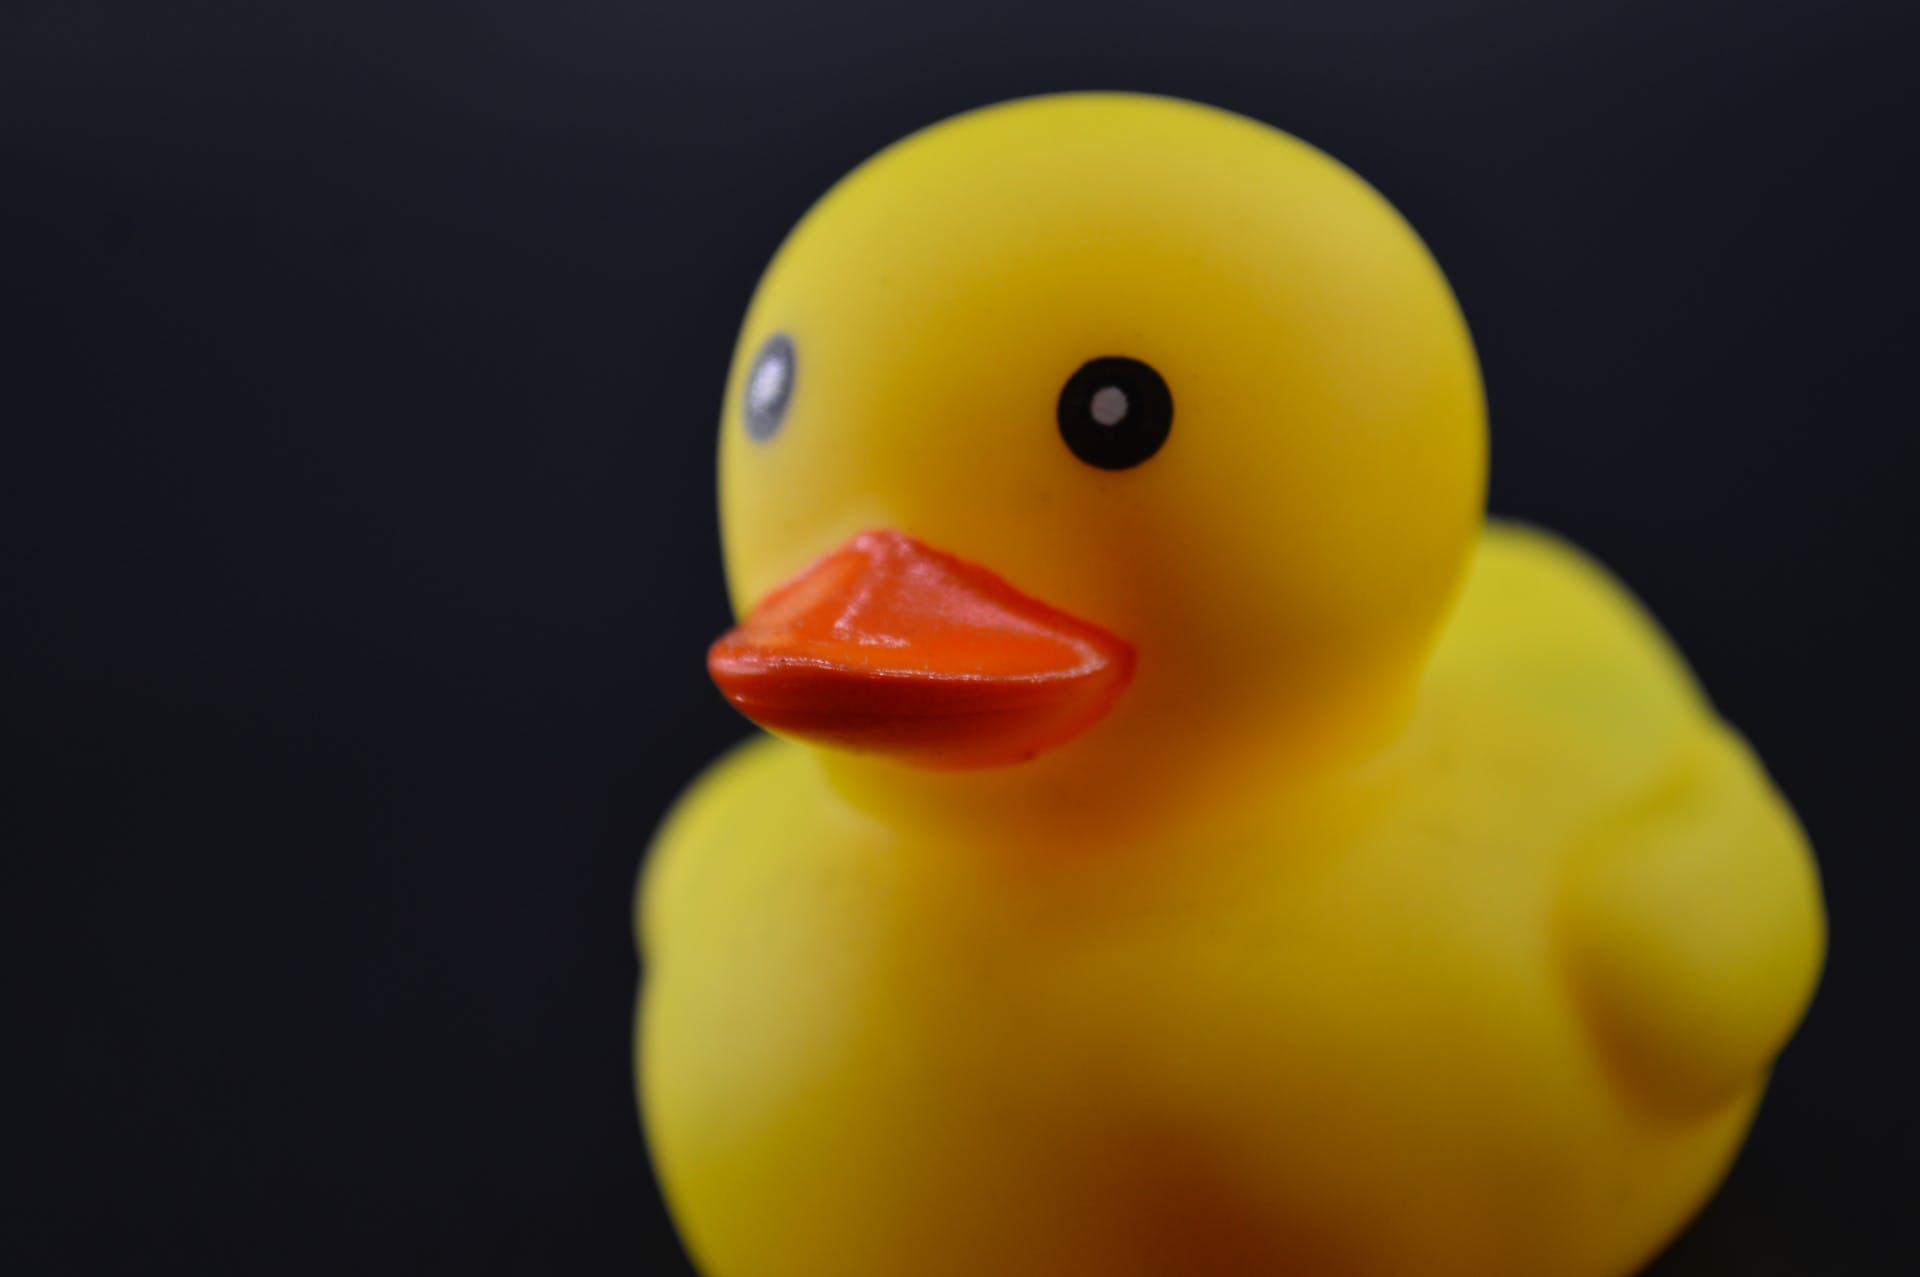 A rubber duck | Source: Pexels